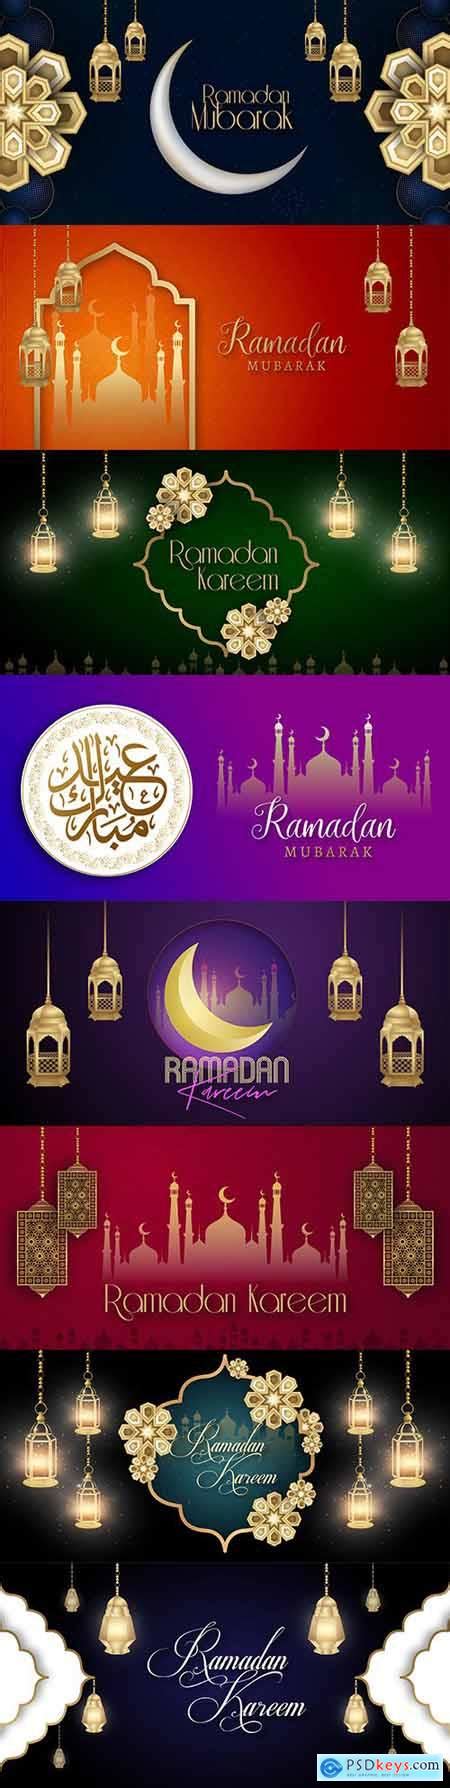 Ramadan Kareem Islamic Social Media Banner Design Background Free